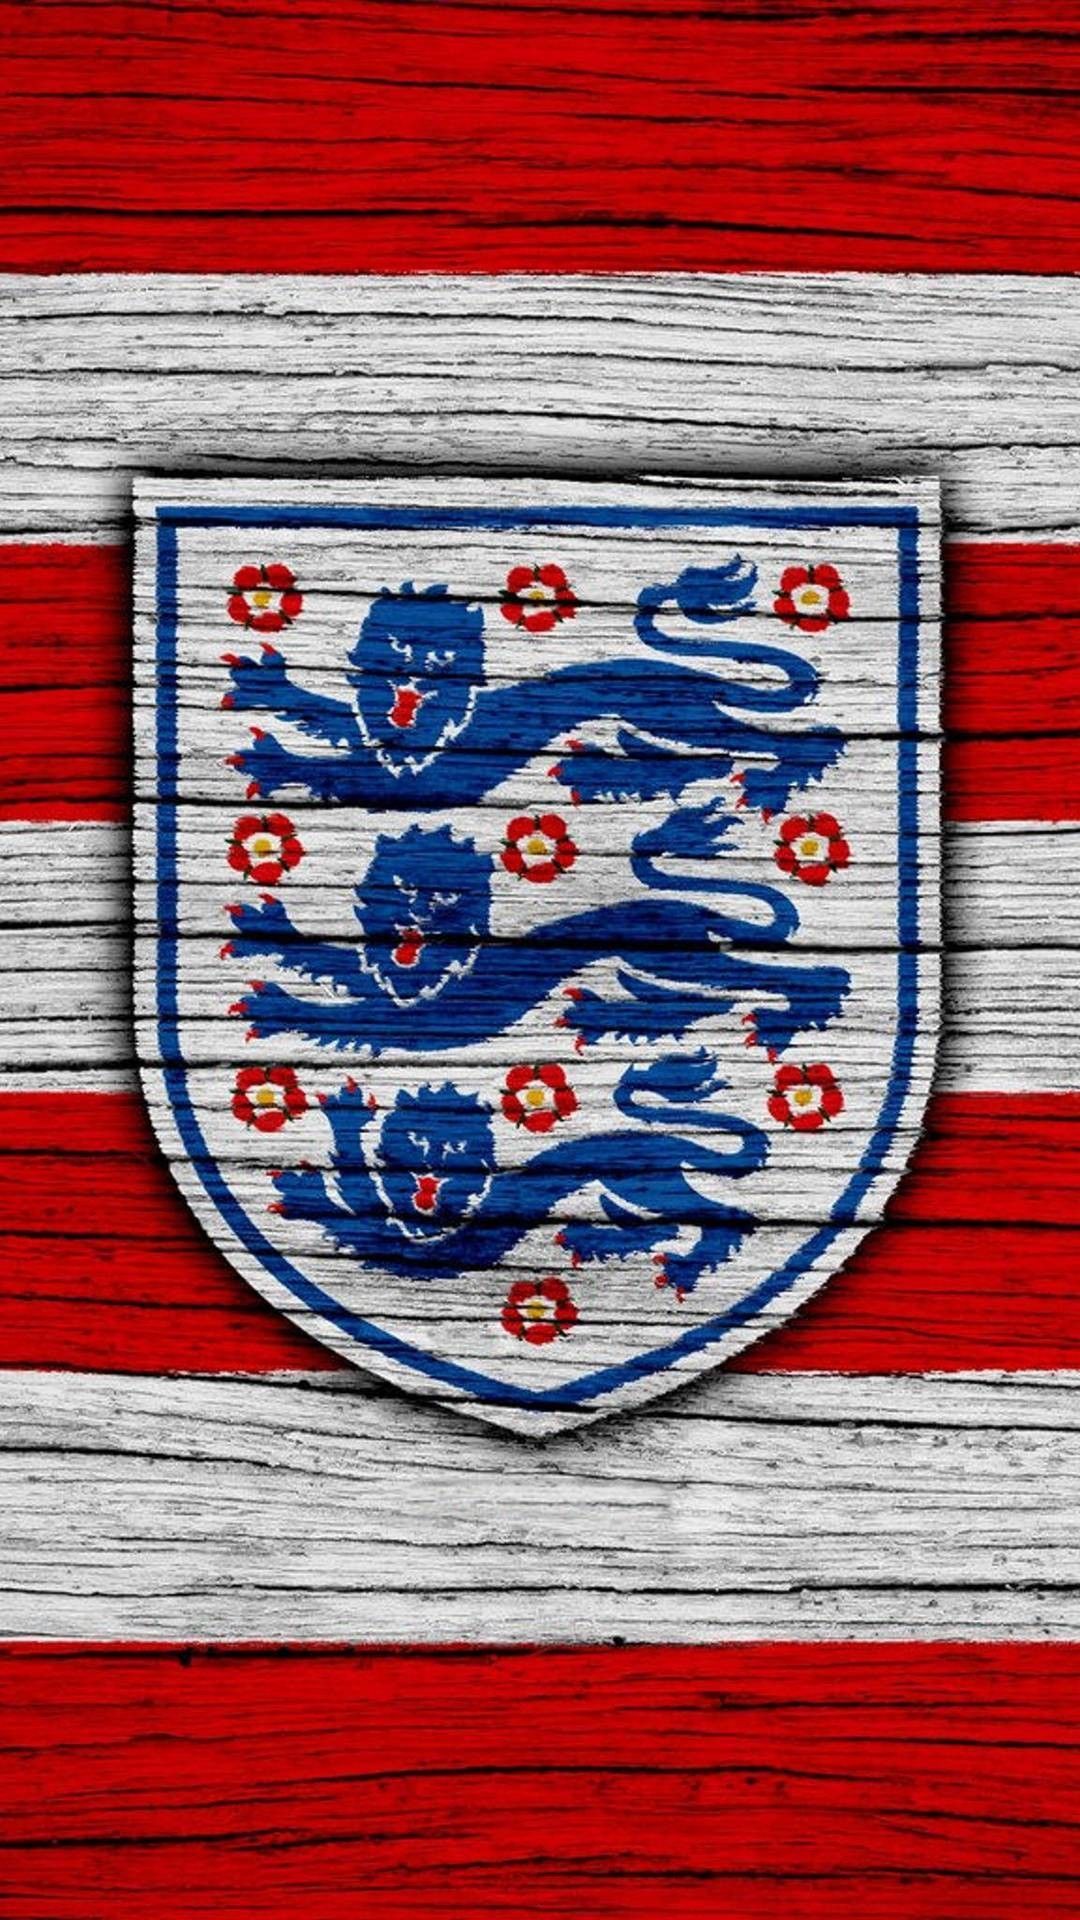 England pic wallpaper. England football, England football team, England flag wallpaper